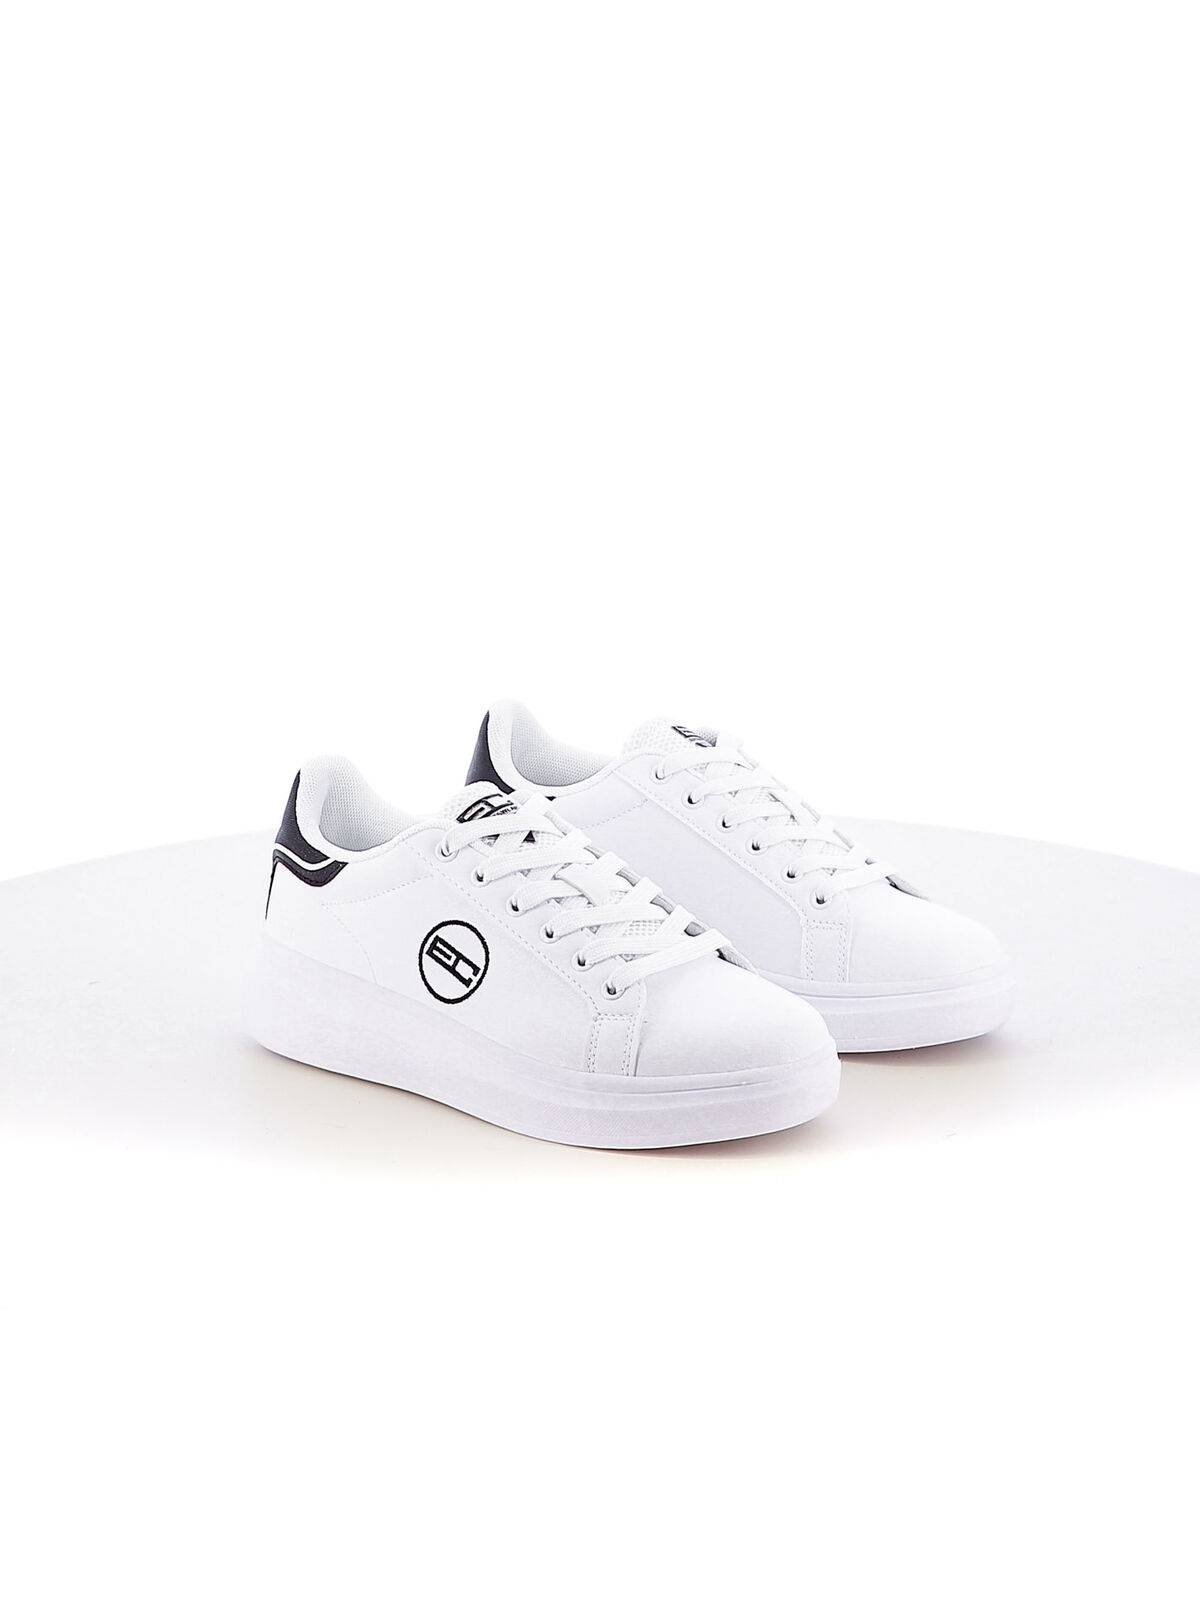 Enrico Coveri Sneakers ULAMA METAL GLITTER - White/Black